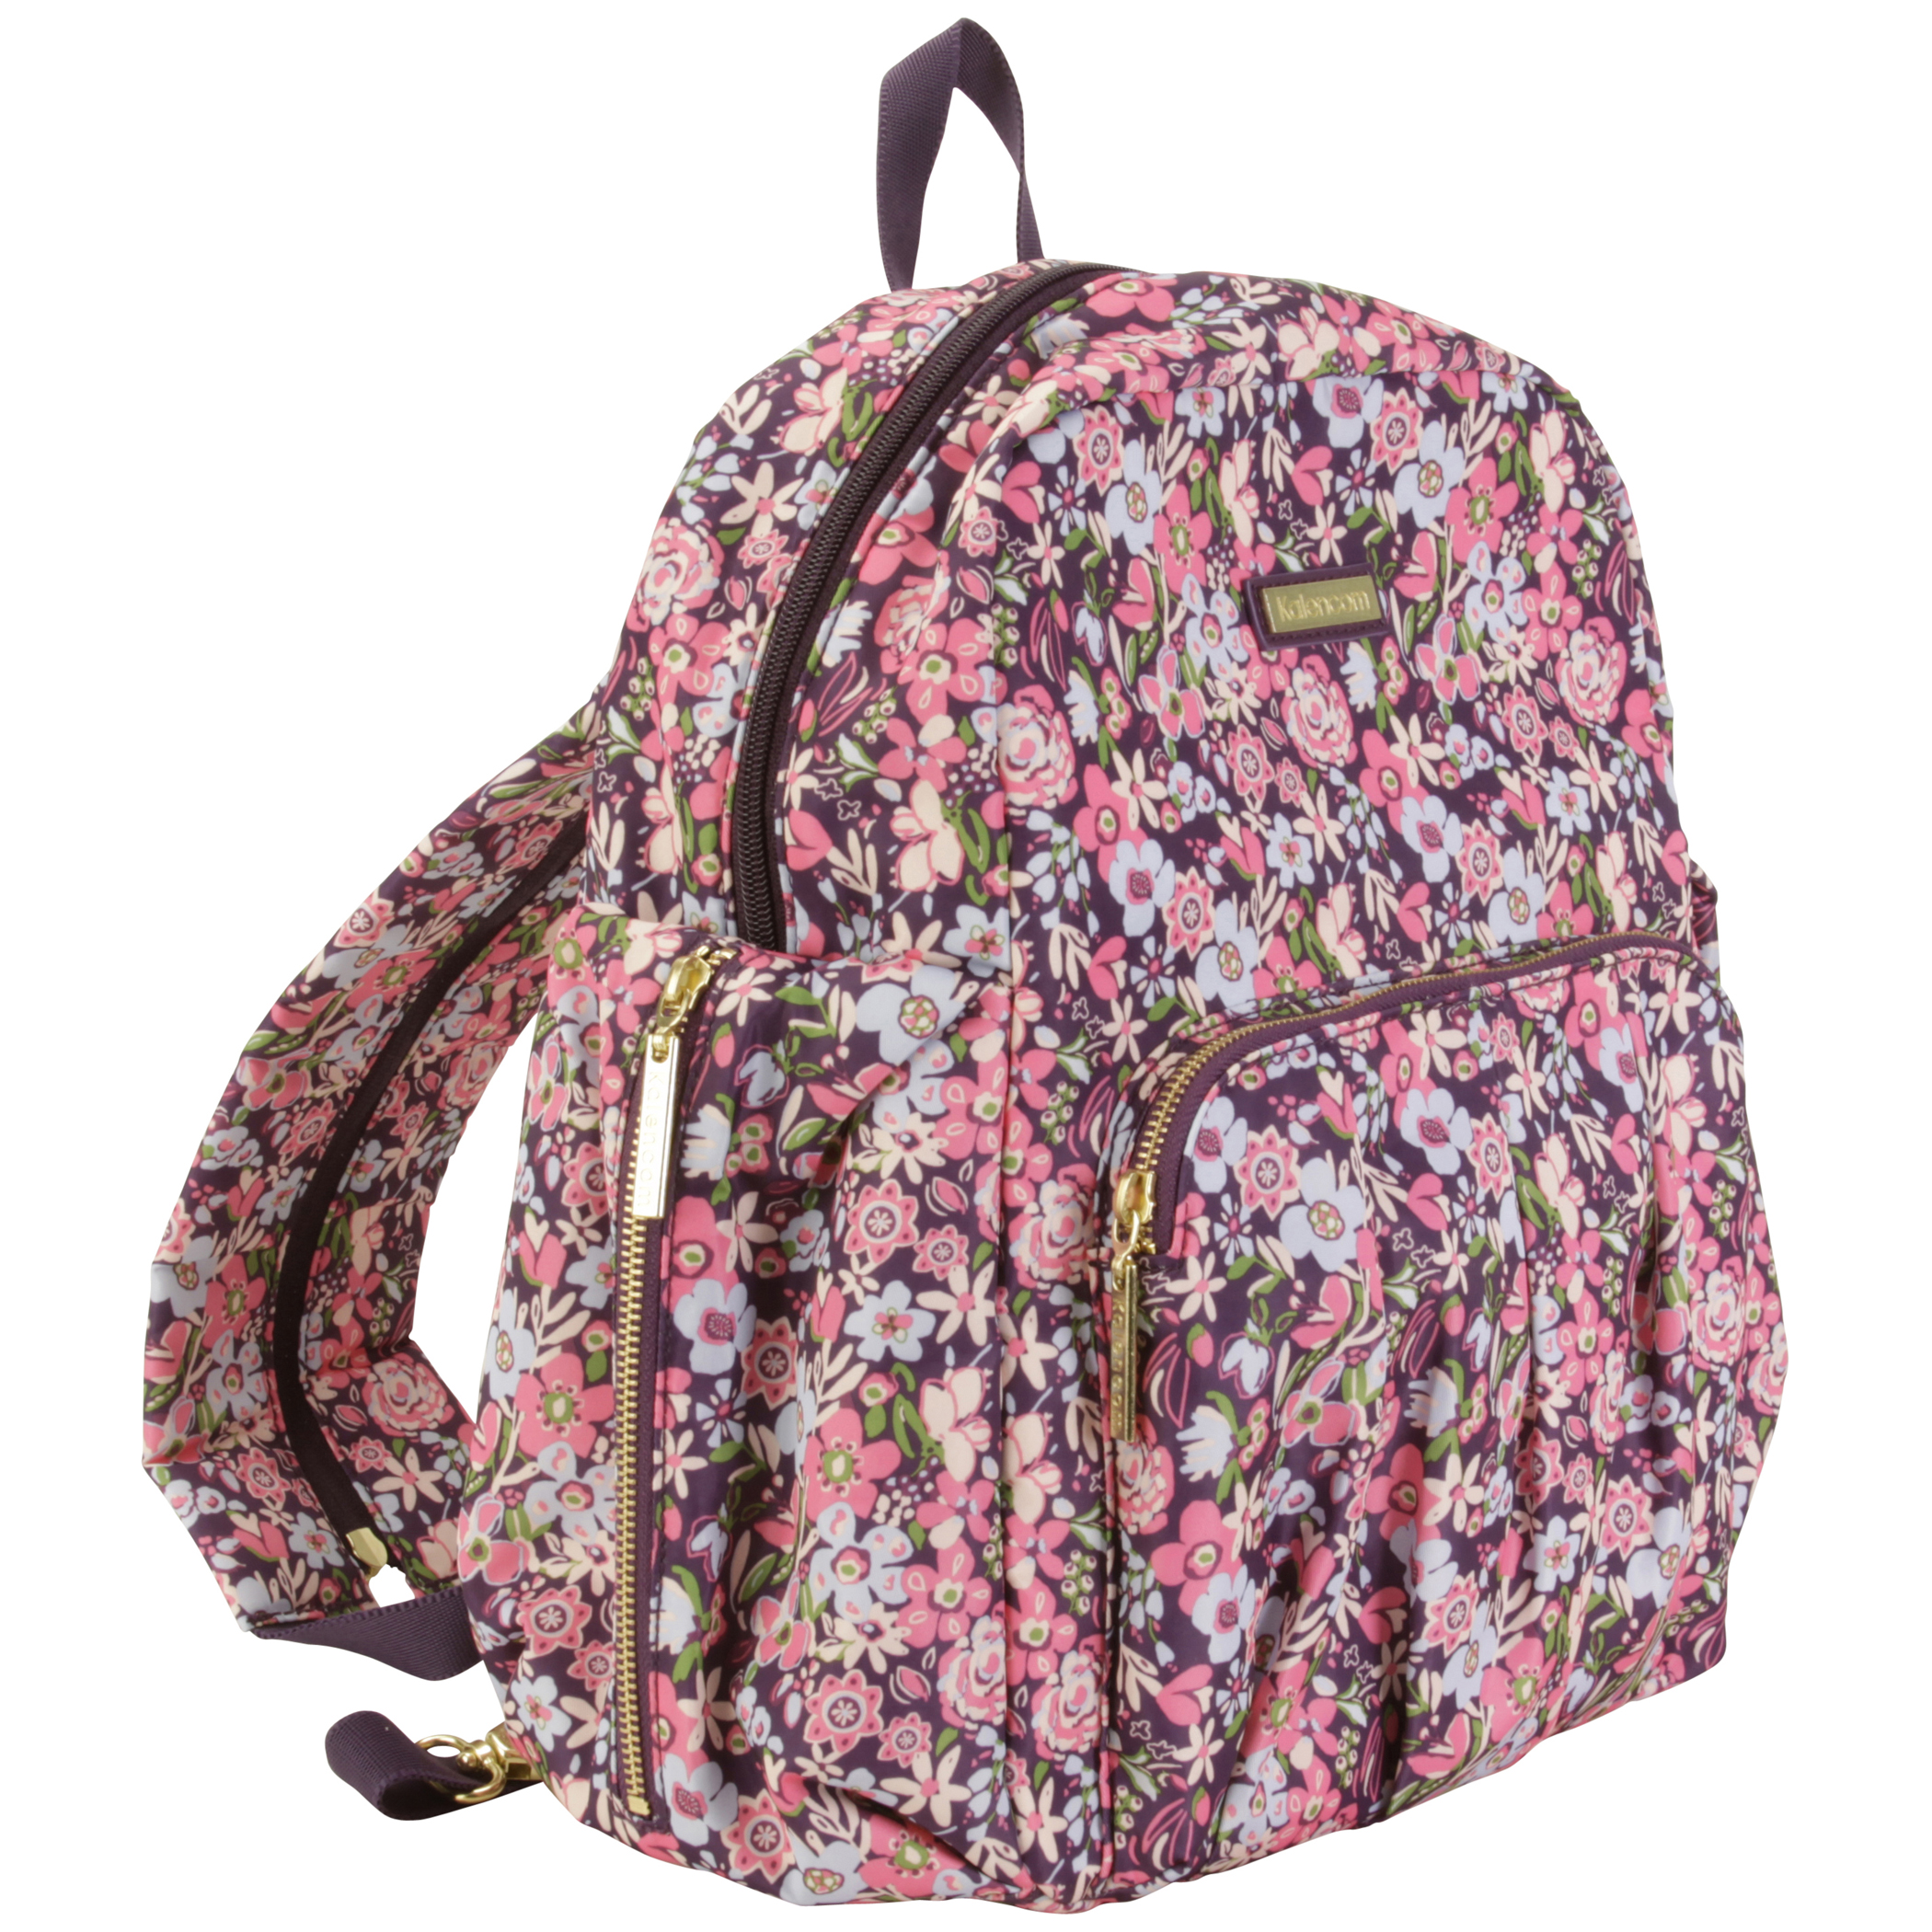 Kalencom Chicago Backpack / Urban Sling Diaper Bag in Blossoms - image 3 of 7